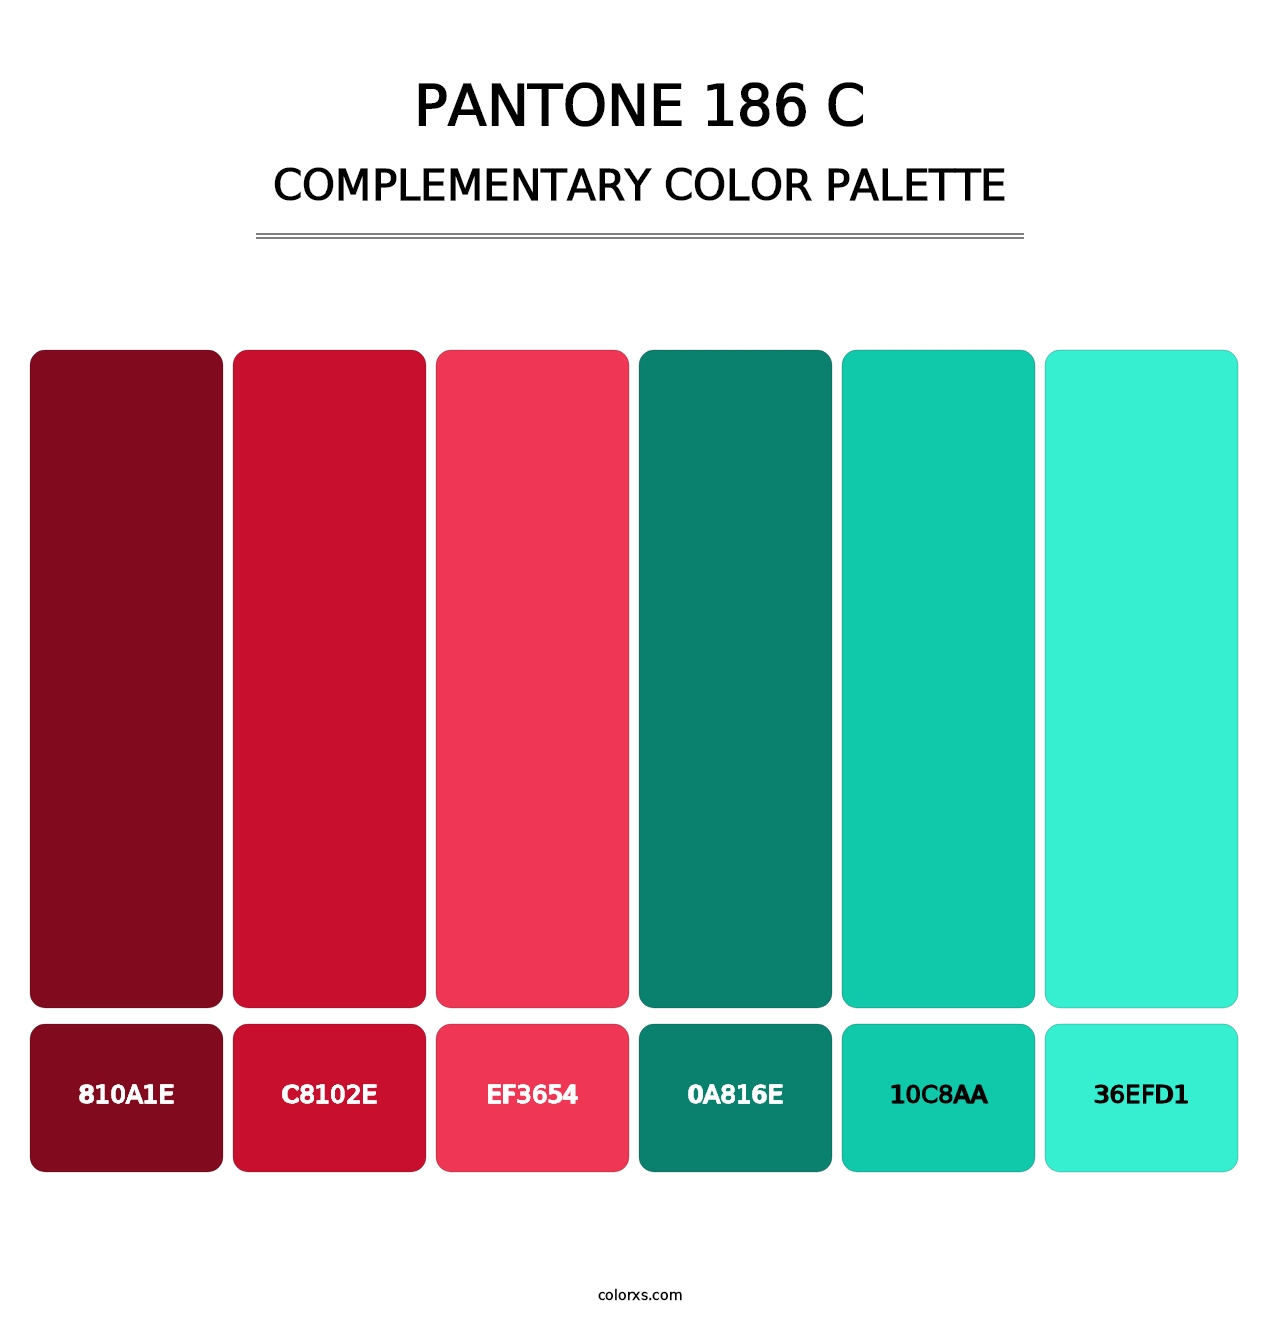 PANTONE 186 C - Complementary Color Palette